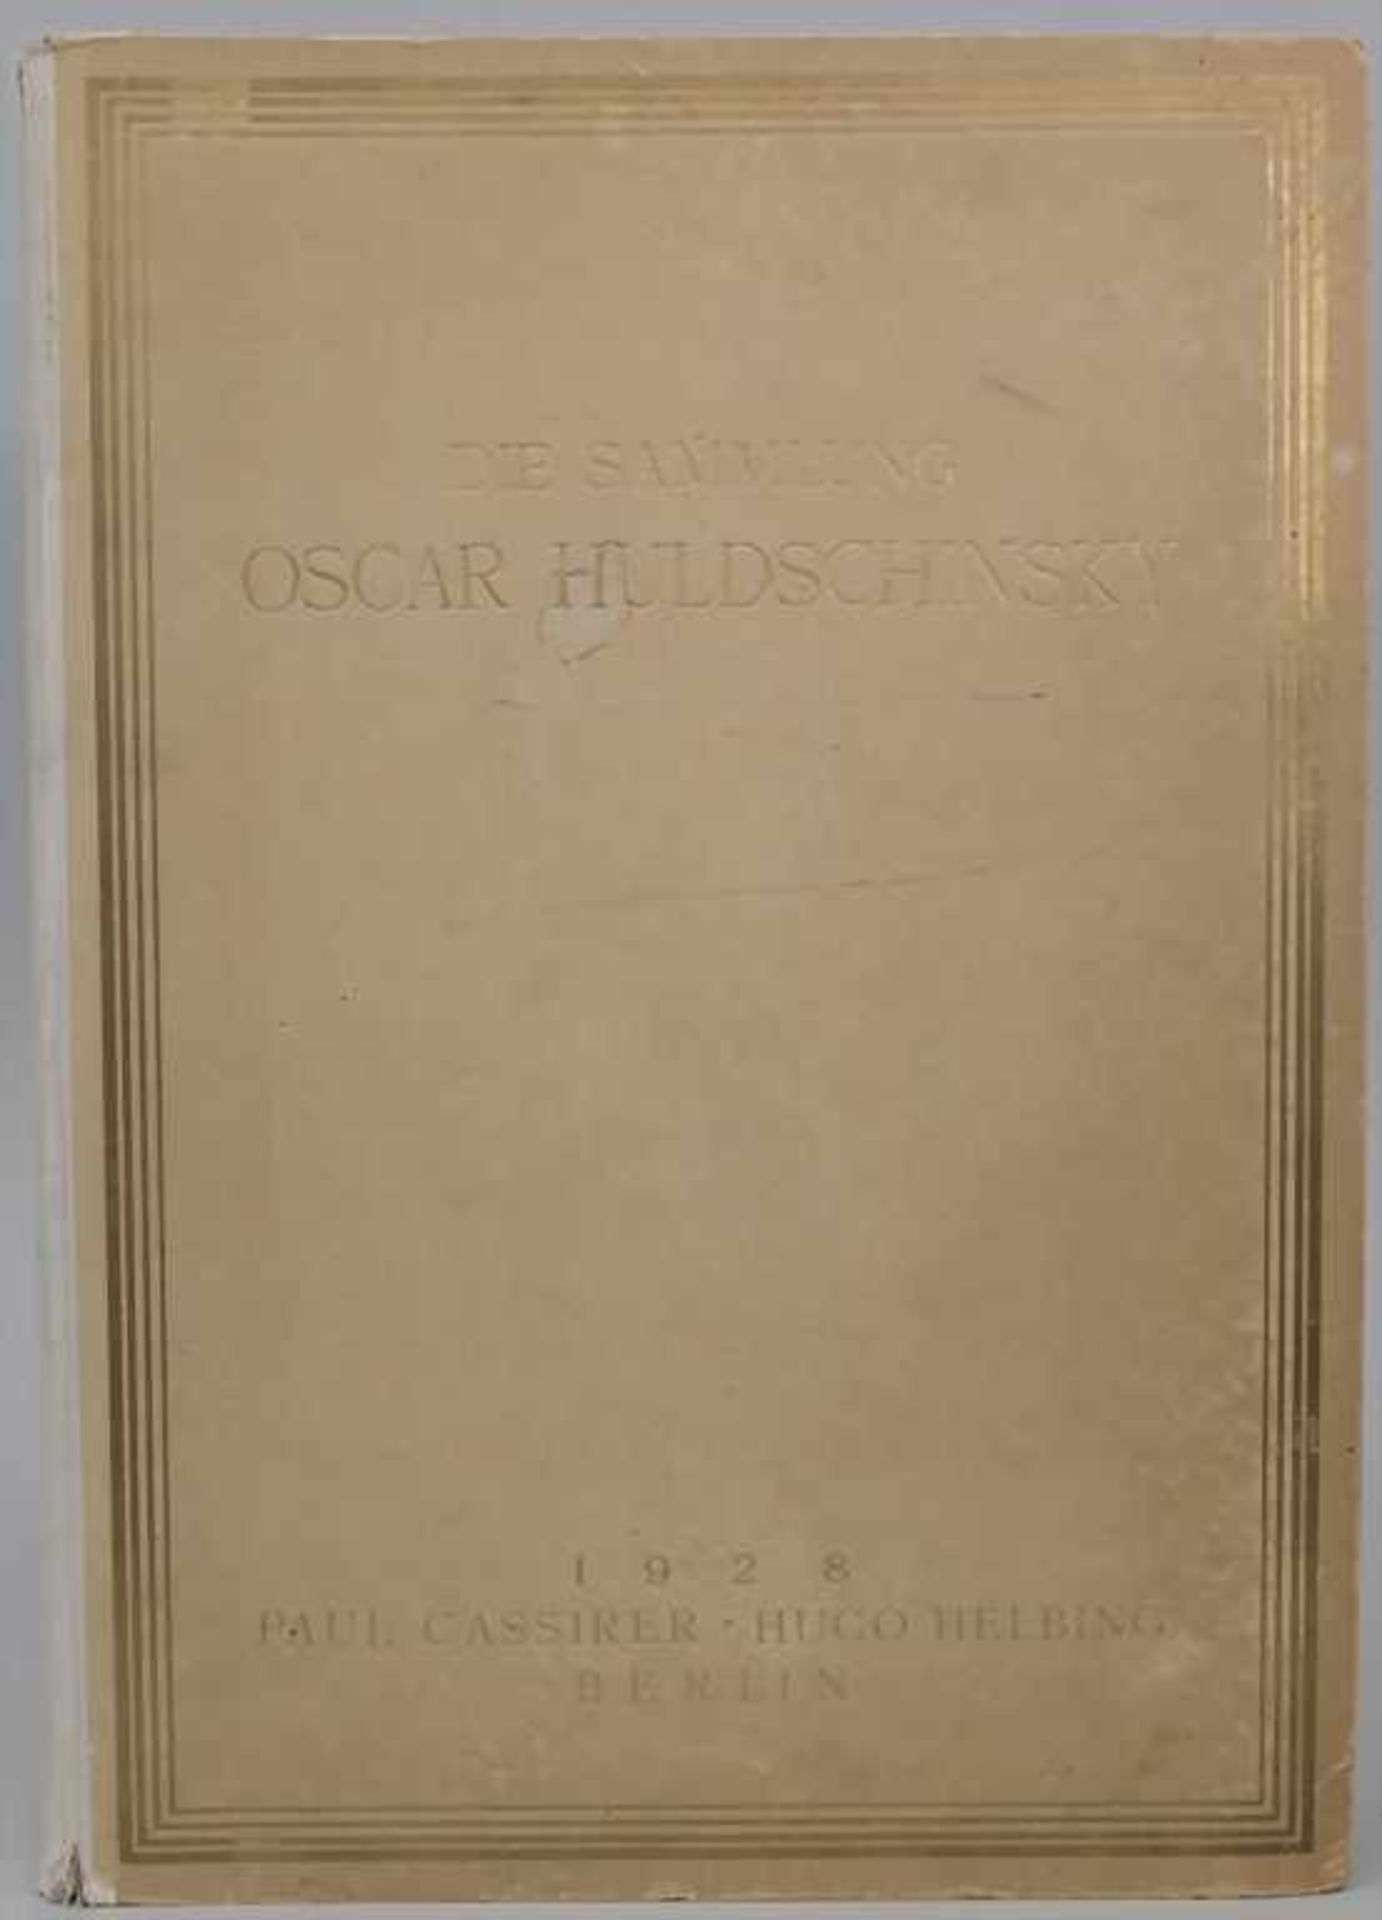 Die Sammlung Oscar Huldschinsky, Paul Cassirer, Hugo Helbing, Berlin, 1928 - Image 5 of 5